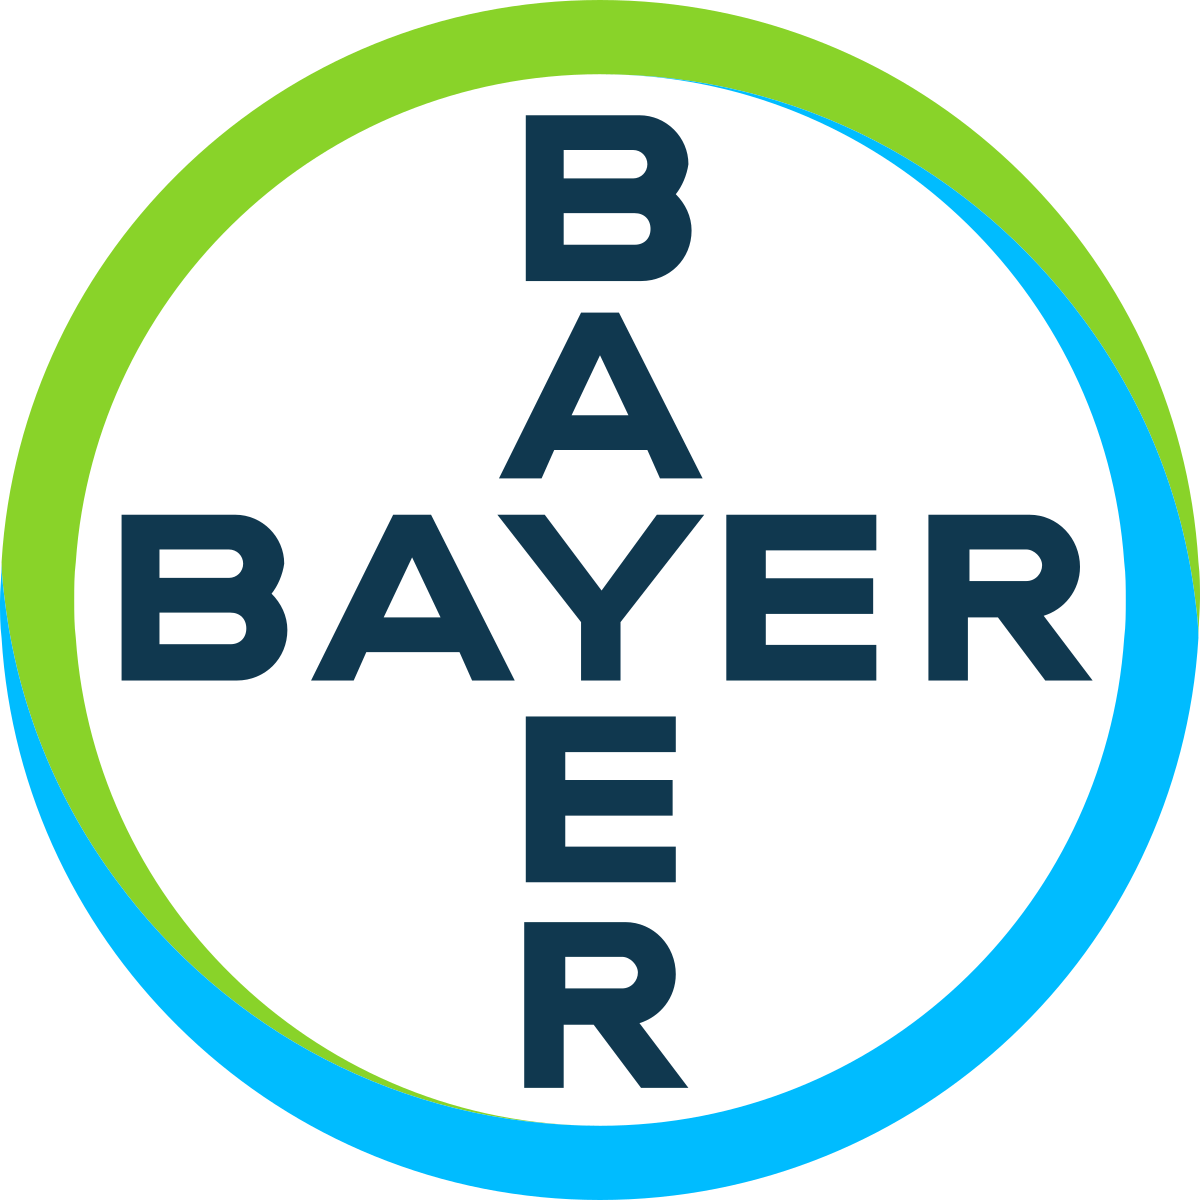 Kundenlogo Bayer blau grün - Digitalagentur SUNZINET